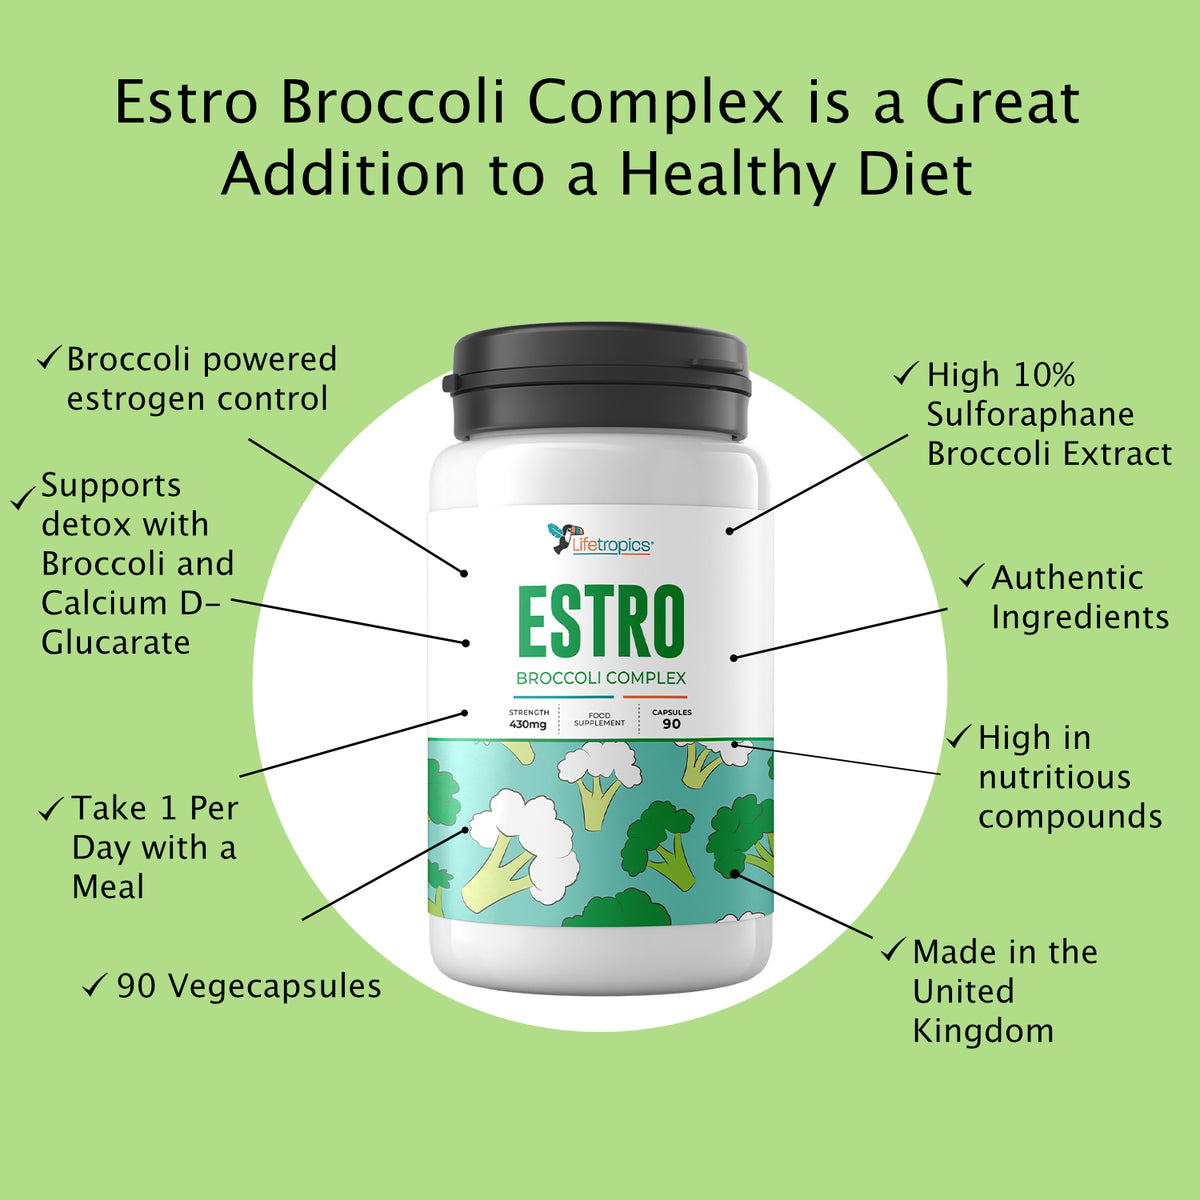 Estro Broccoli Complex